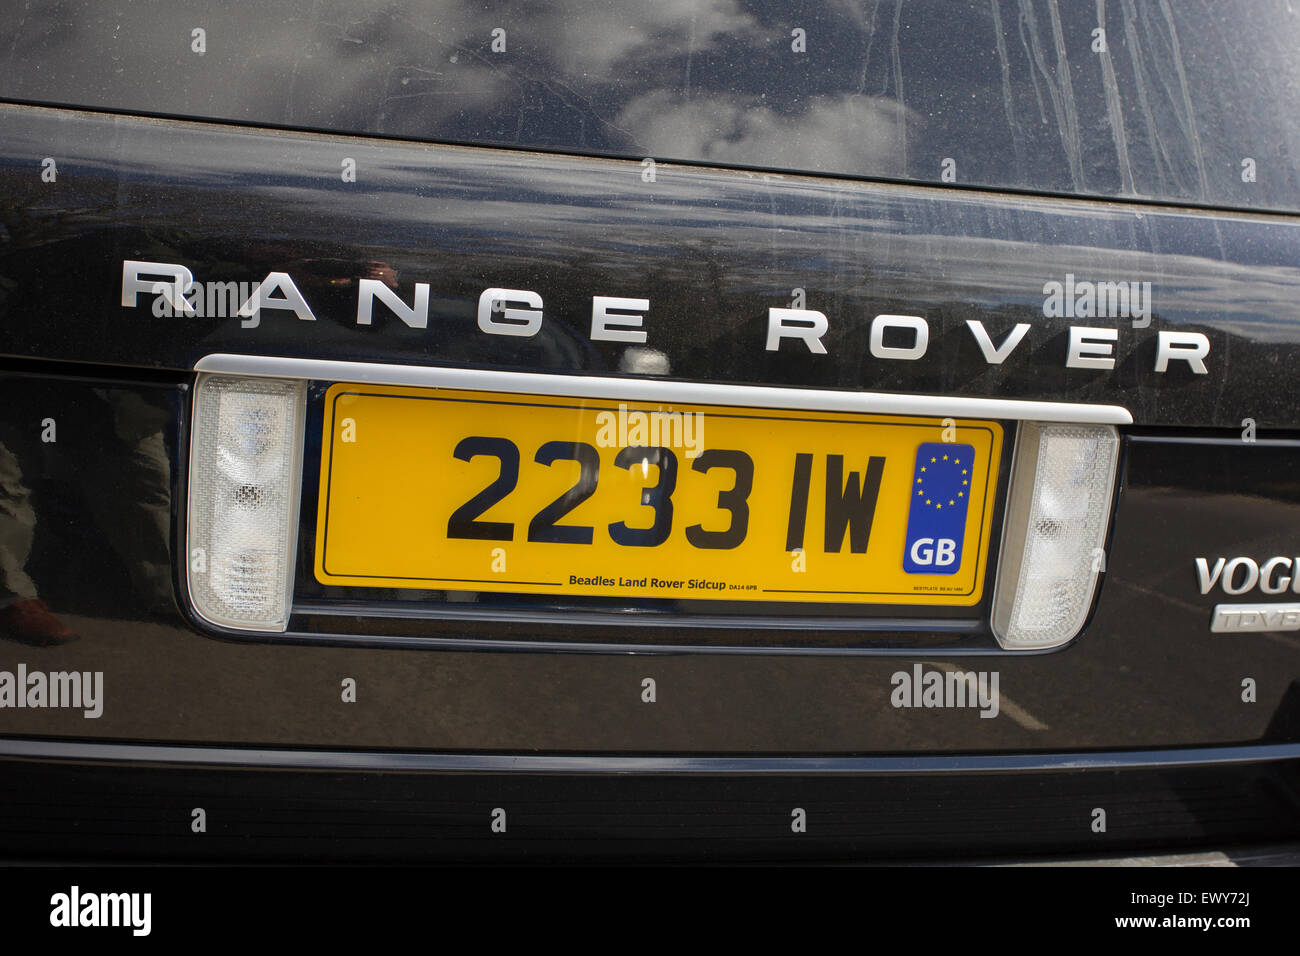 Personalised car plate -Fotos und -Bildmaterial in hoher Auflösung – Alamy